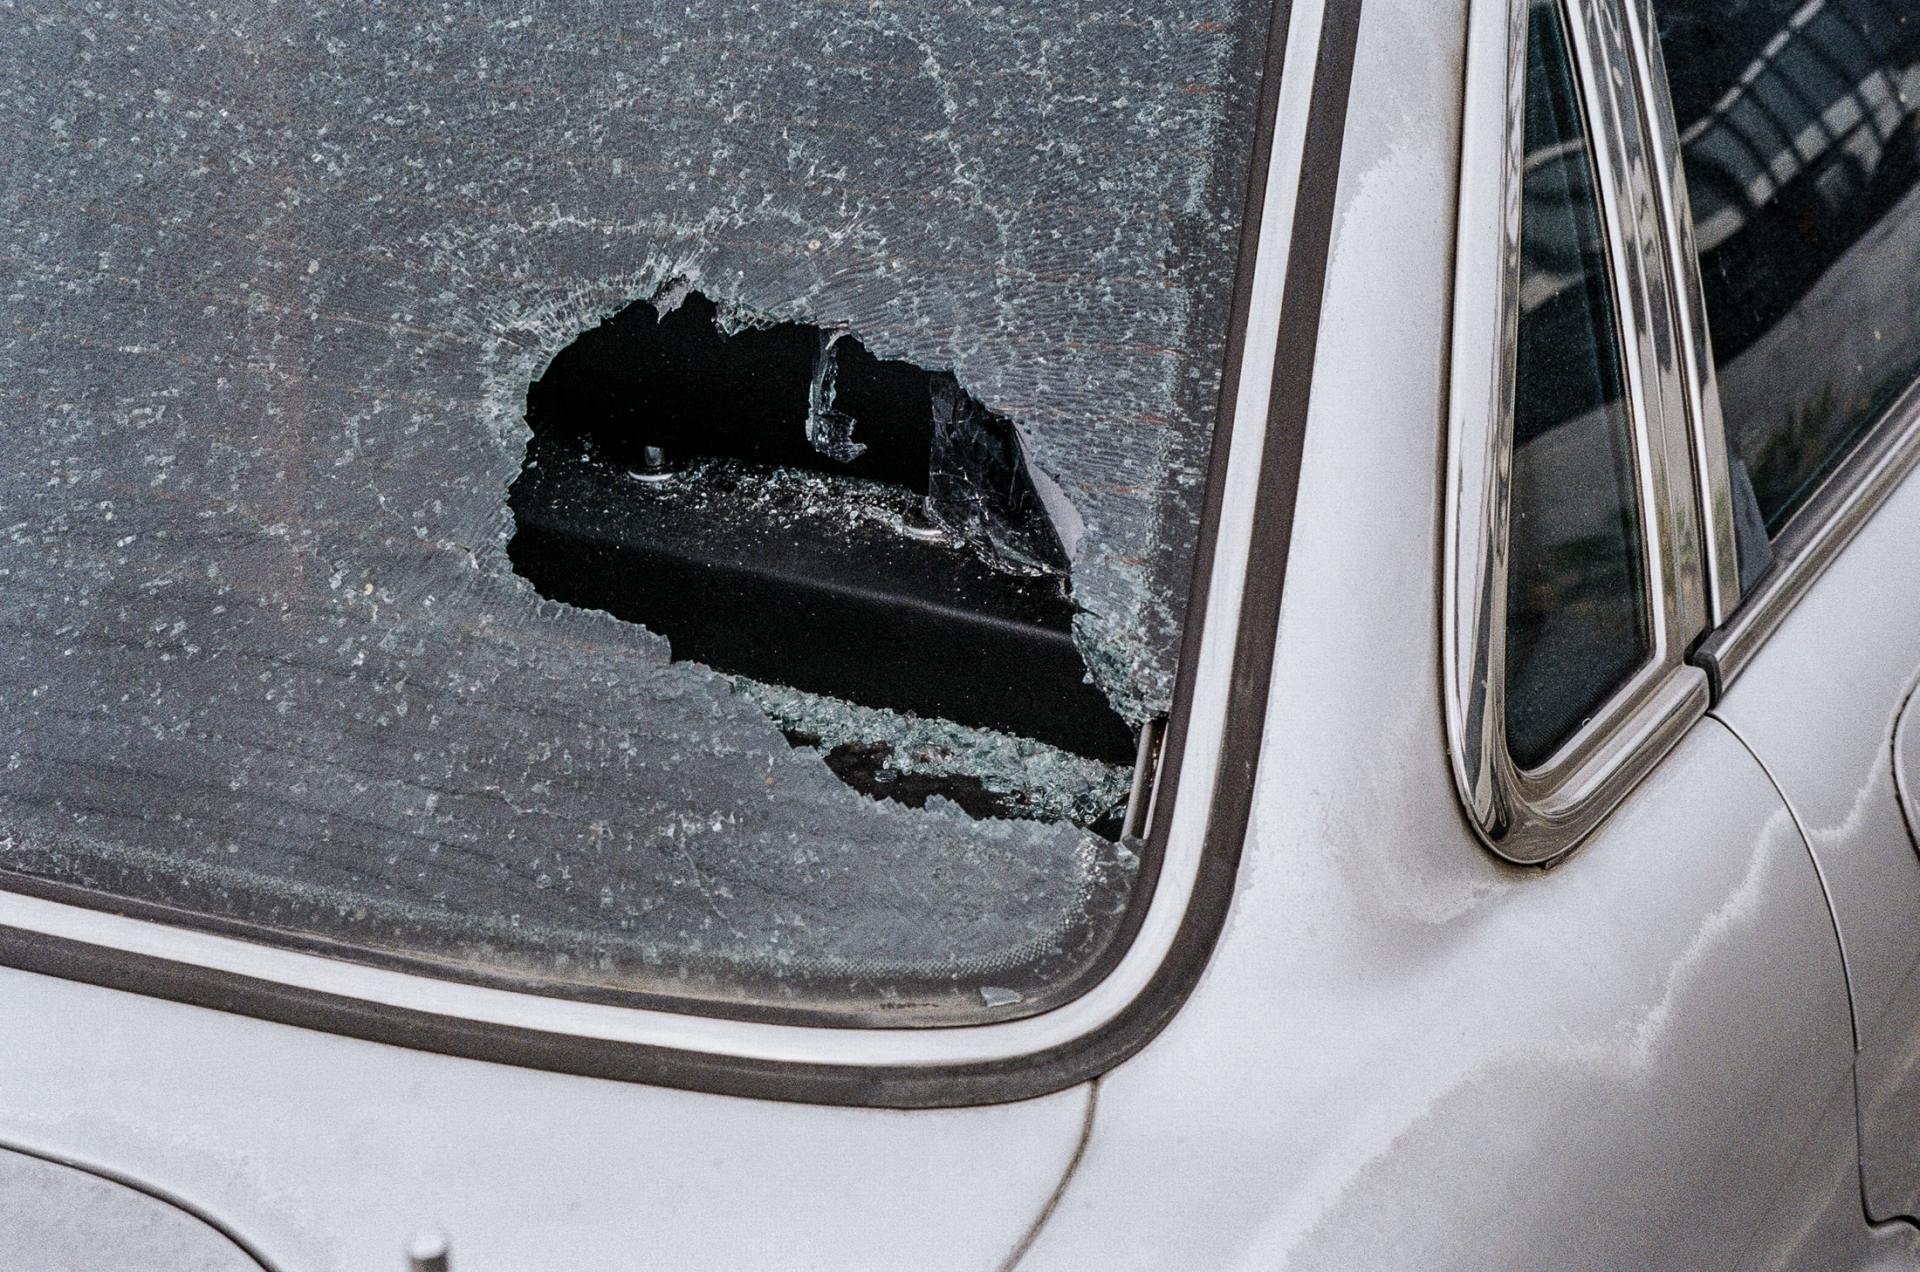 Car windshield damaged from a rock or baseball